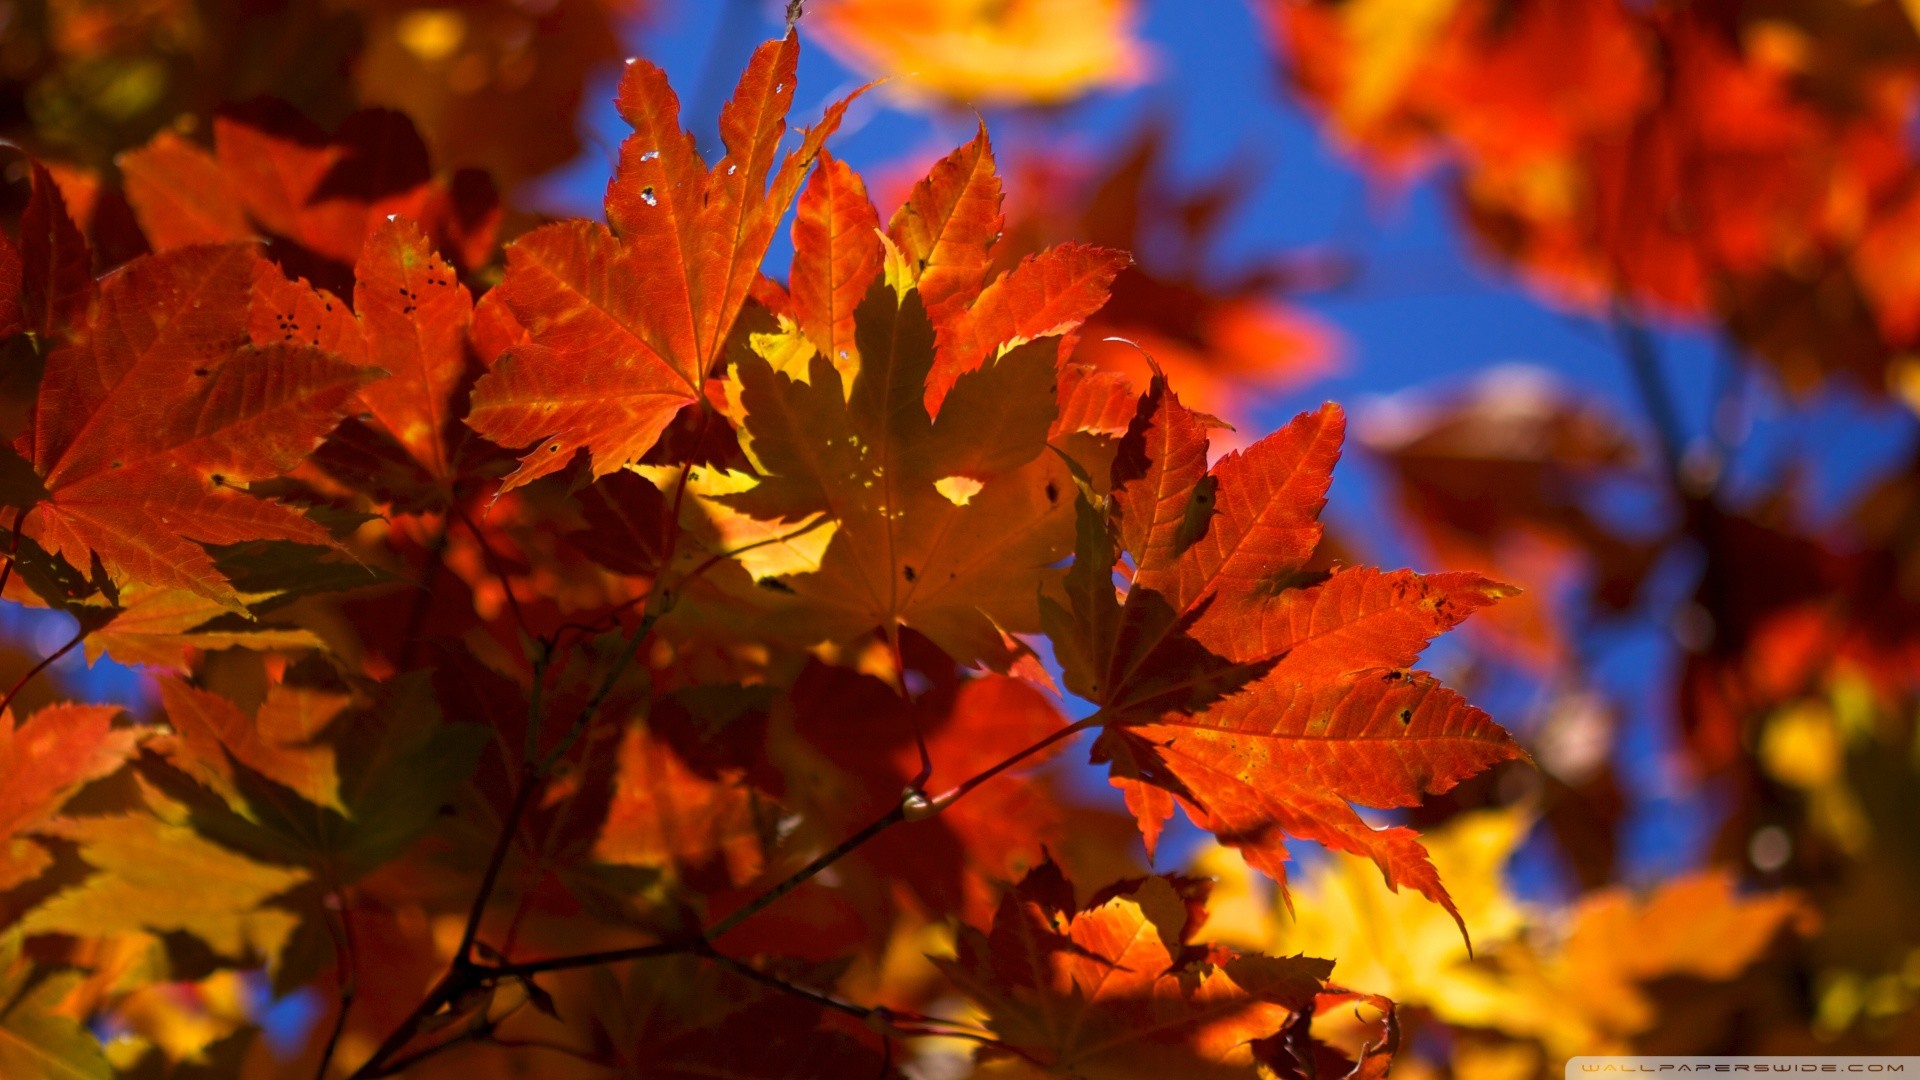 Fall Leaves Wallpaper Desktop Background